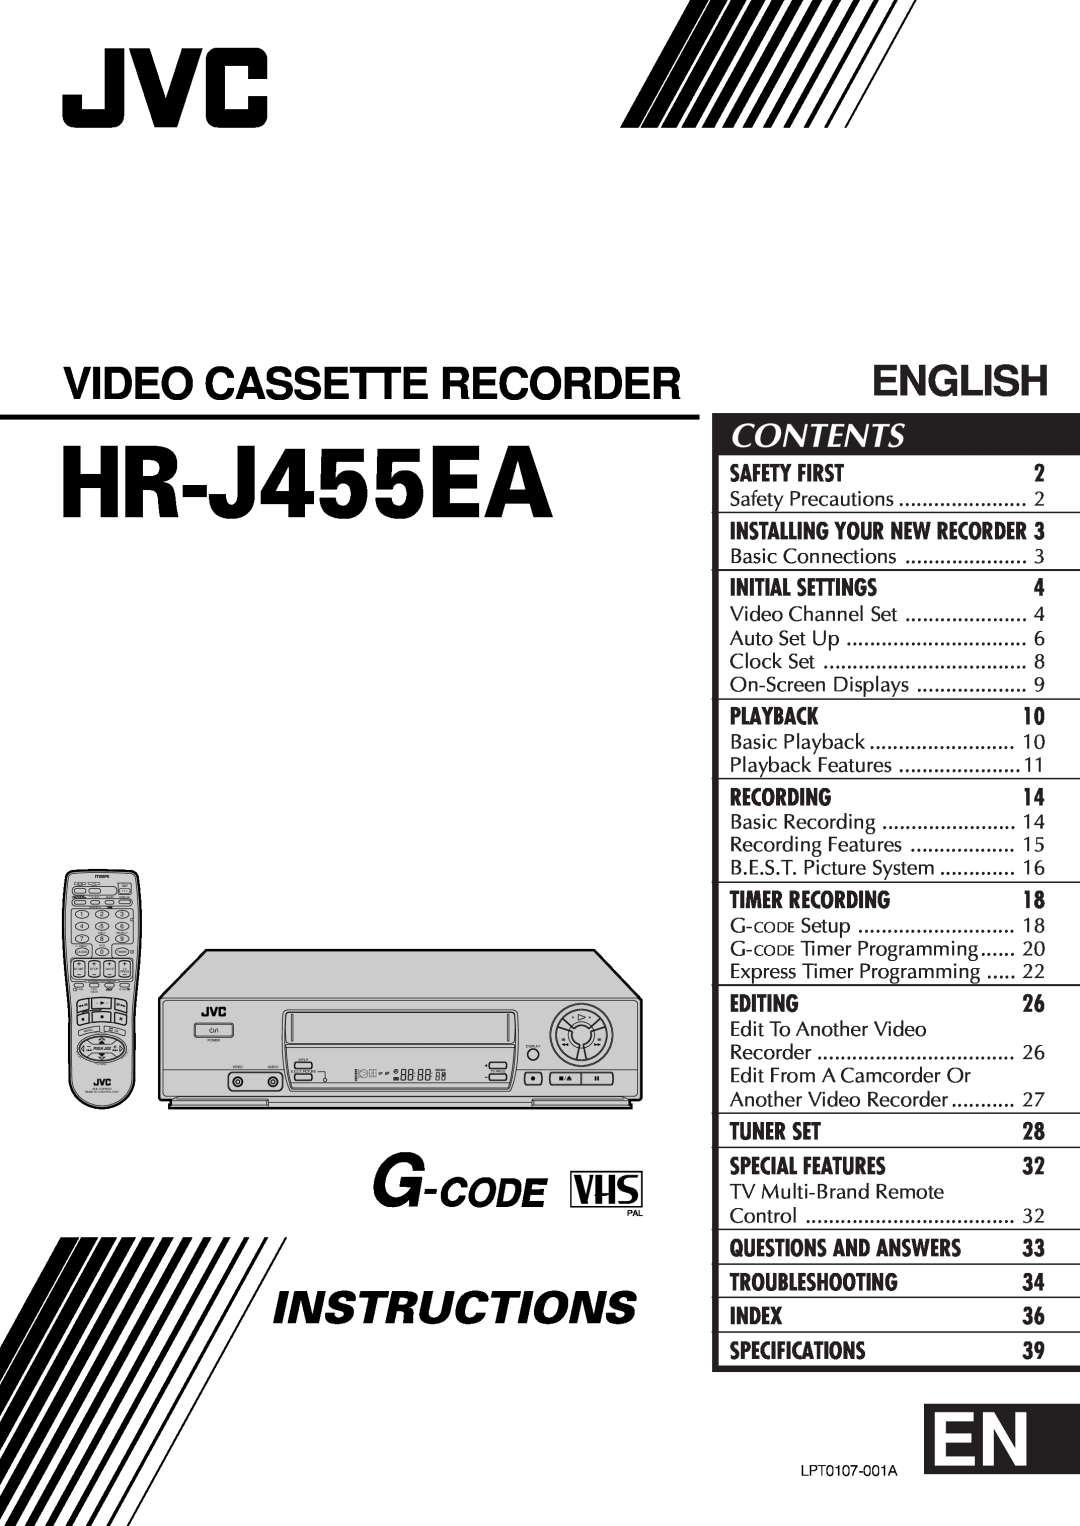 JVC HR-J455EA specifications Video Cassette Recorder, Instructions, English, Contents 